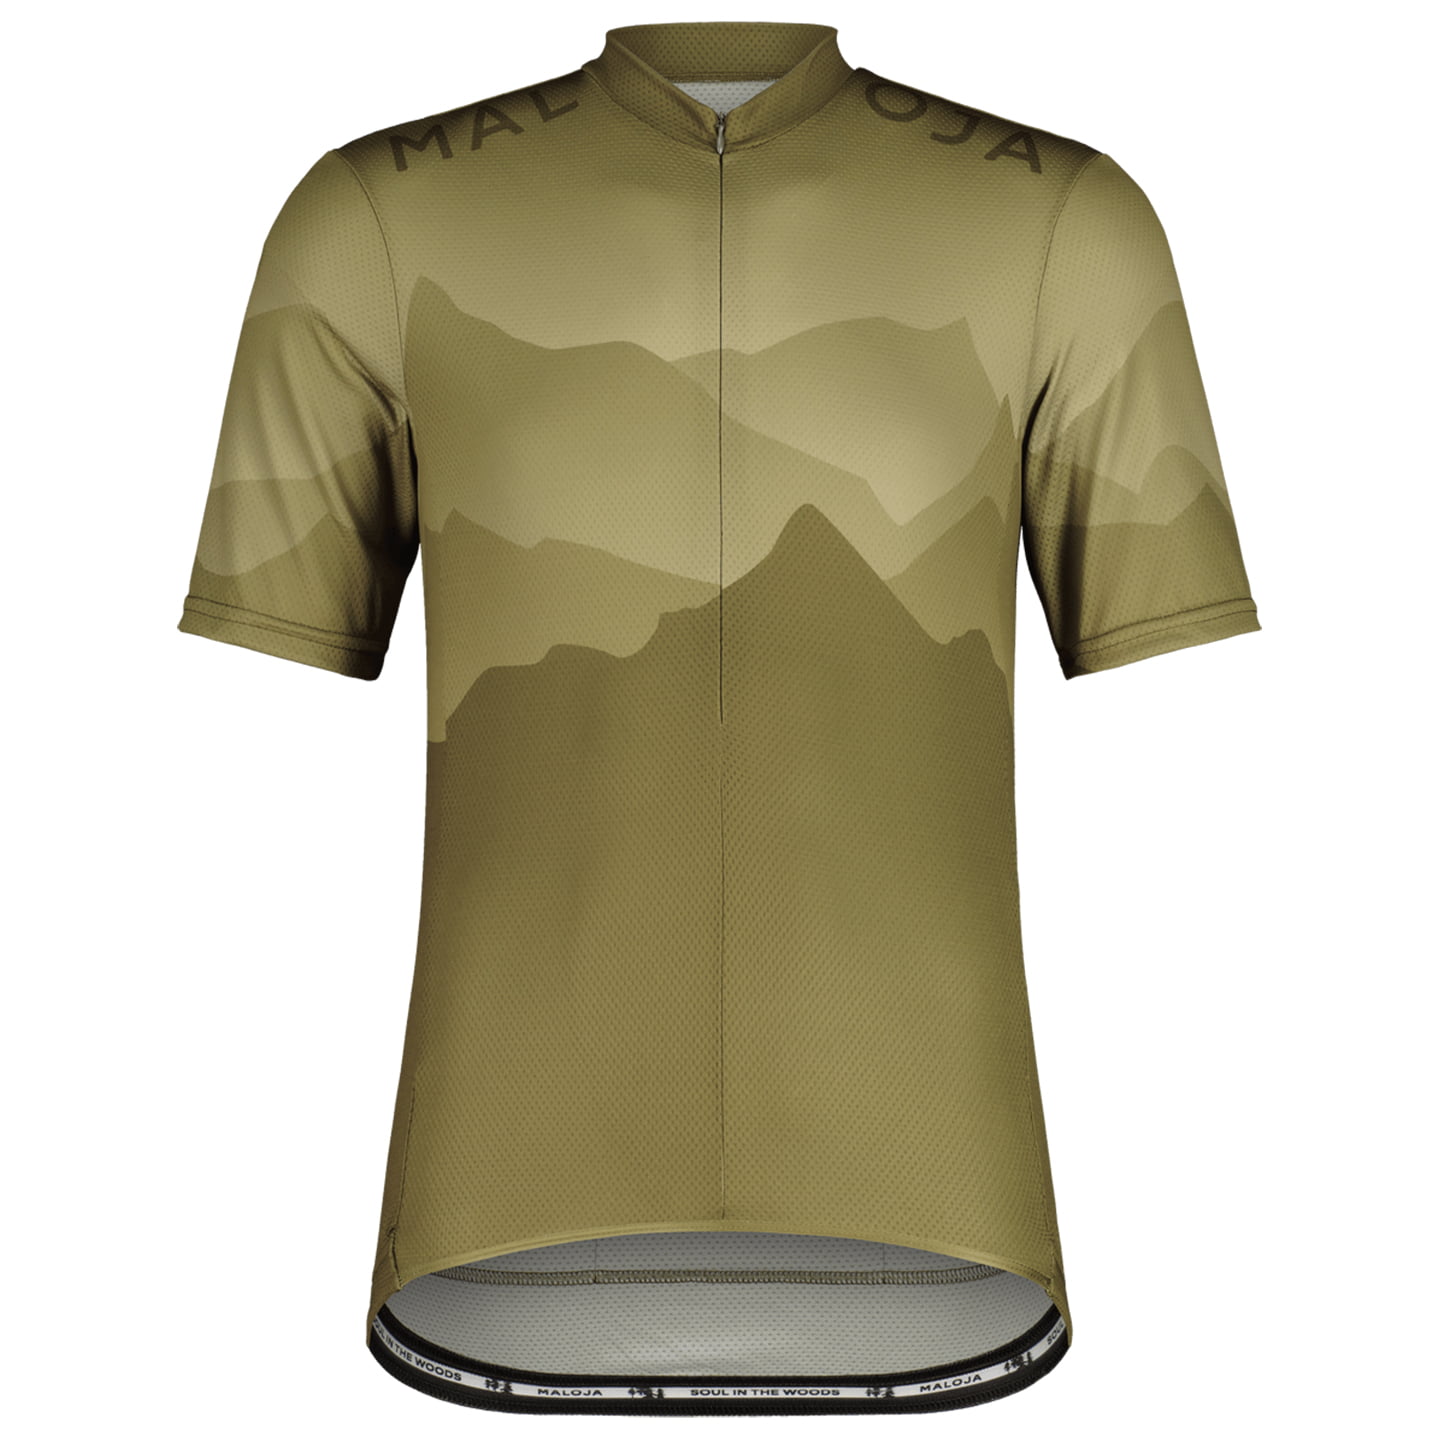 MALOJA PinzagenM. Short Sleeve Jersey Short Sleeve Jersey, for men, size M, Cycling jersey, Cycling clothing